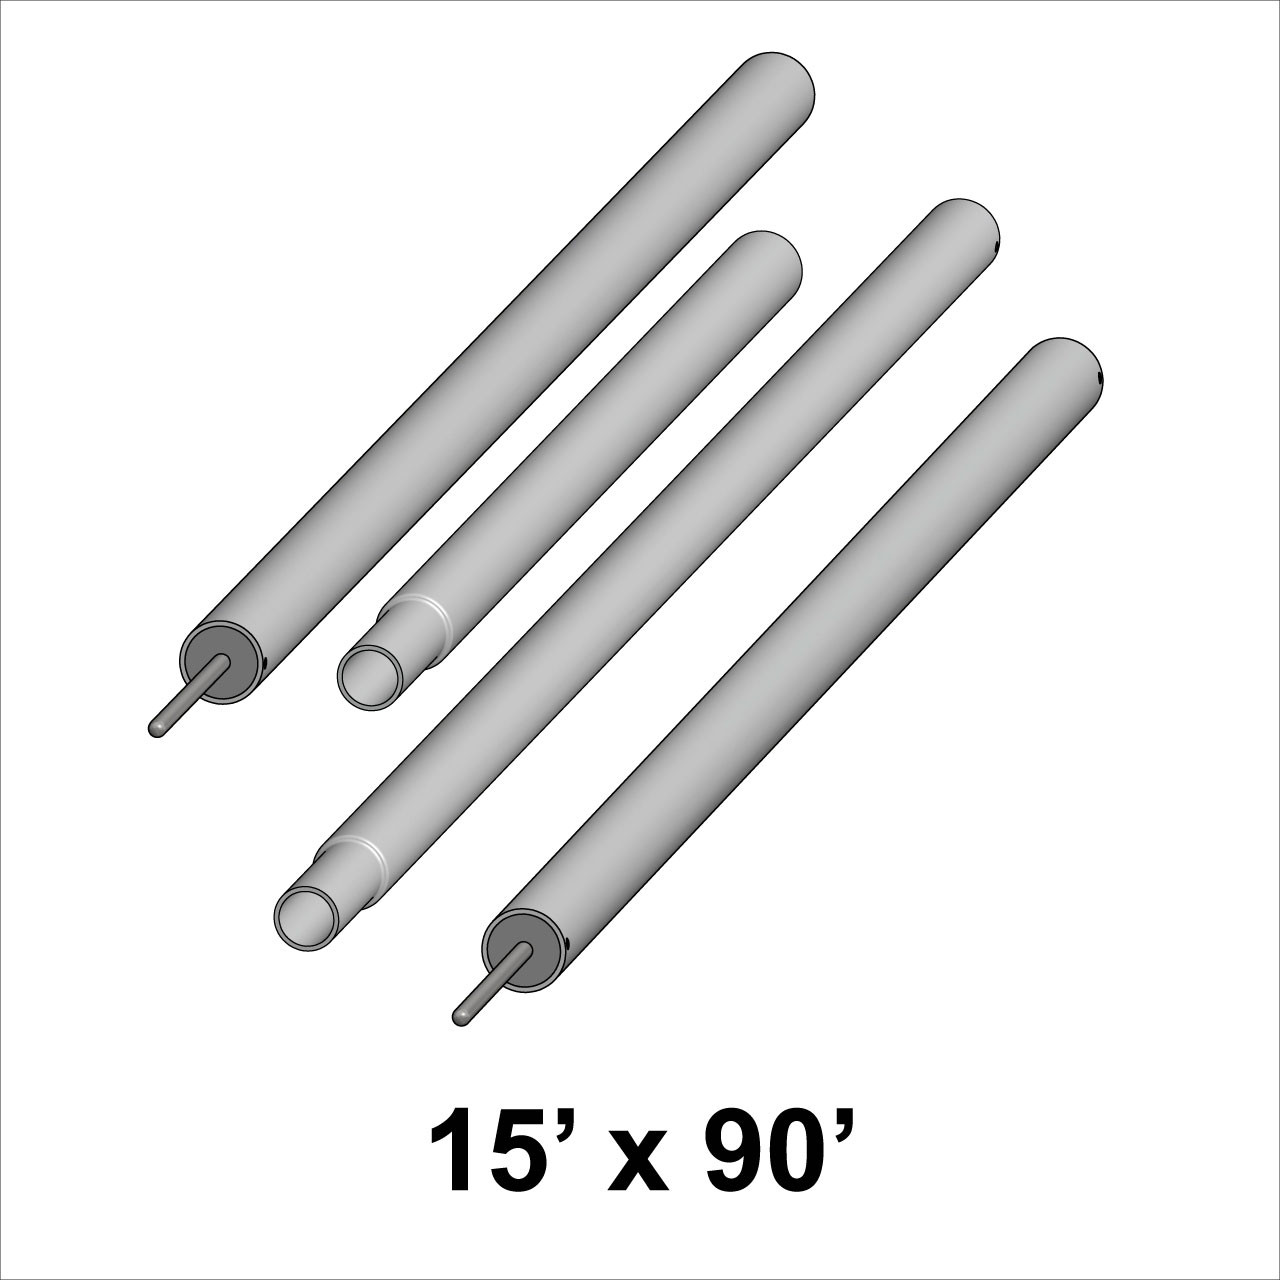 15' x 90' Classic Series Pole Kit